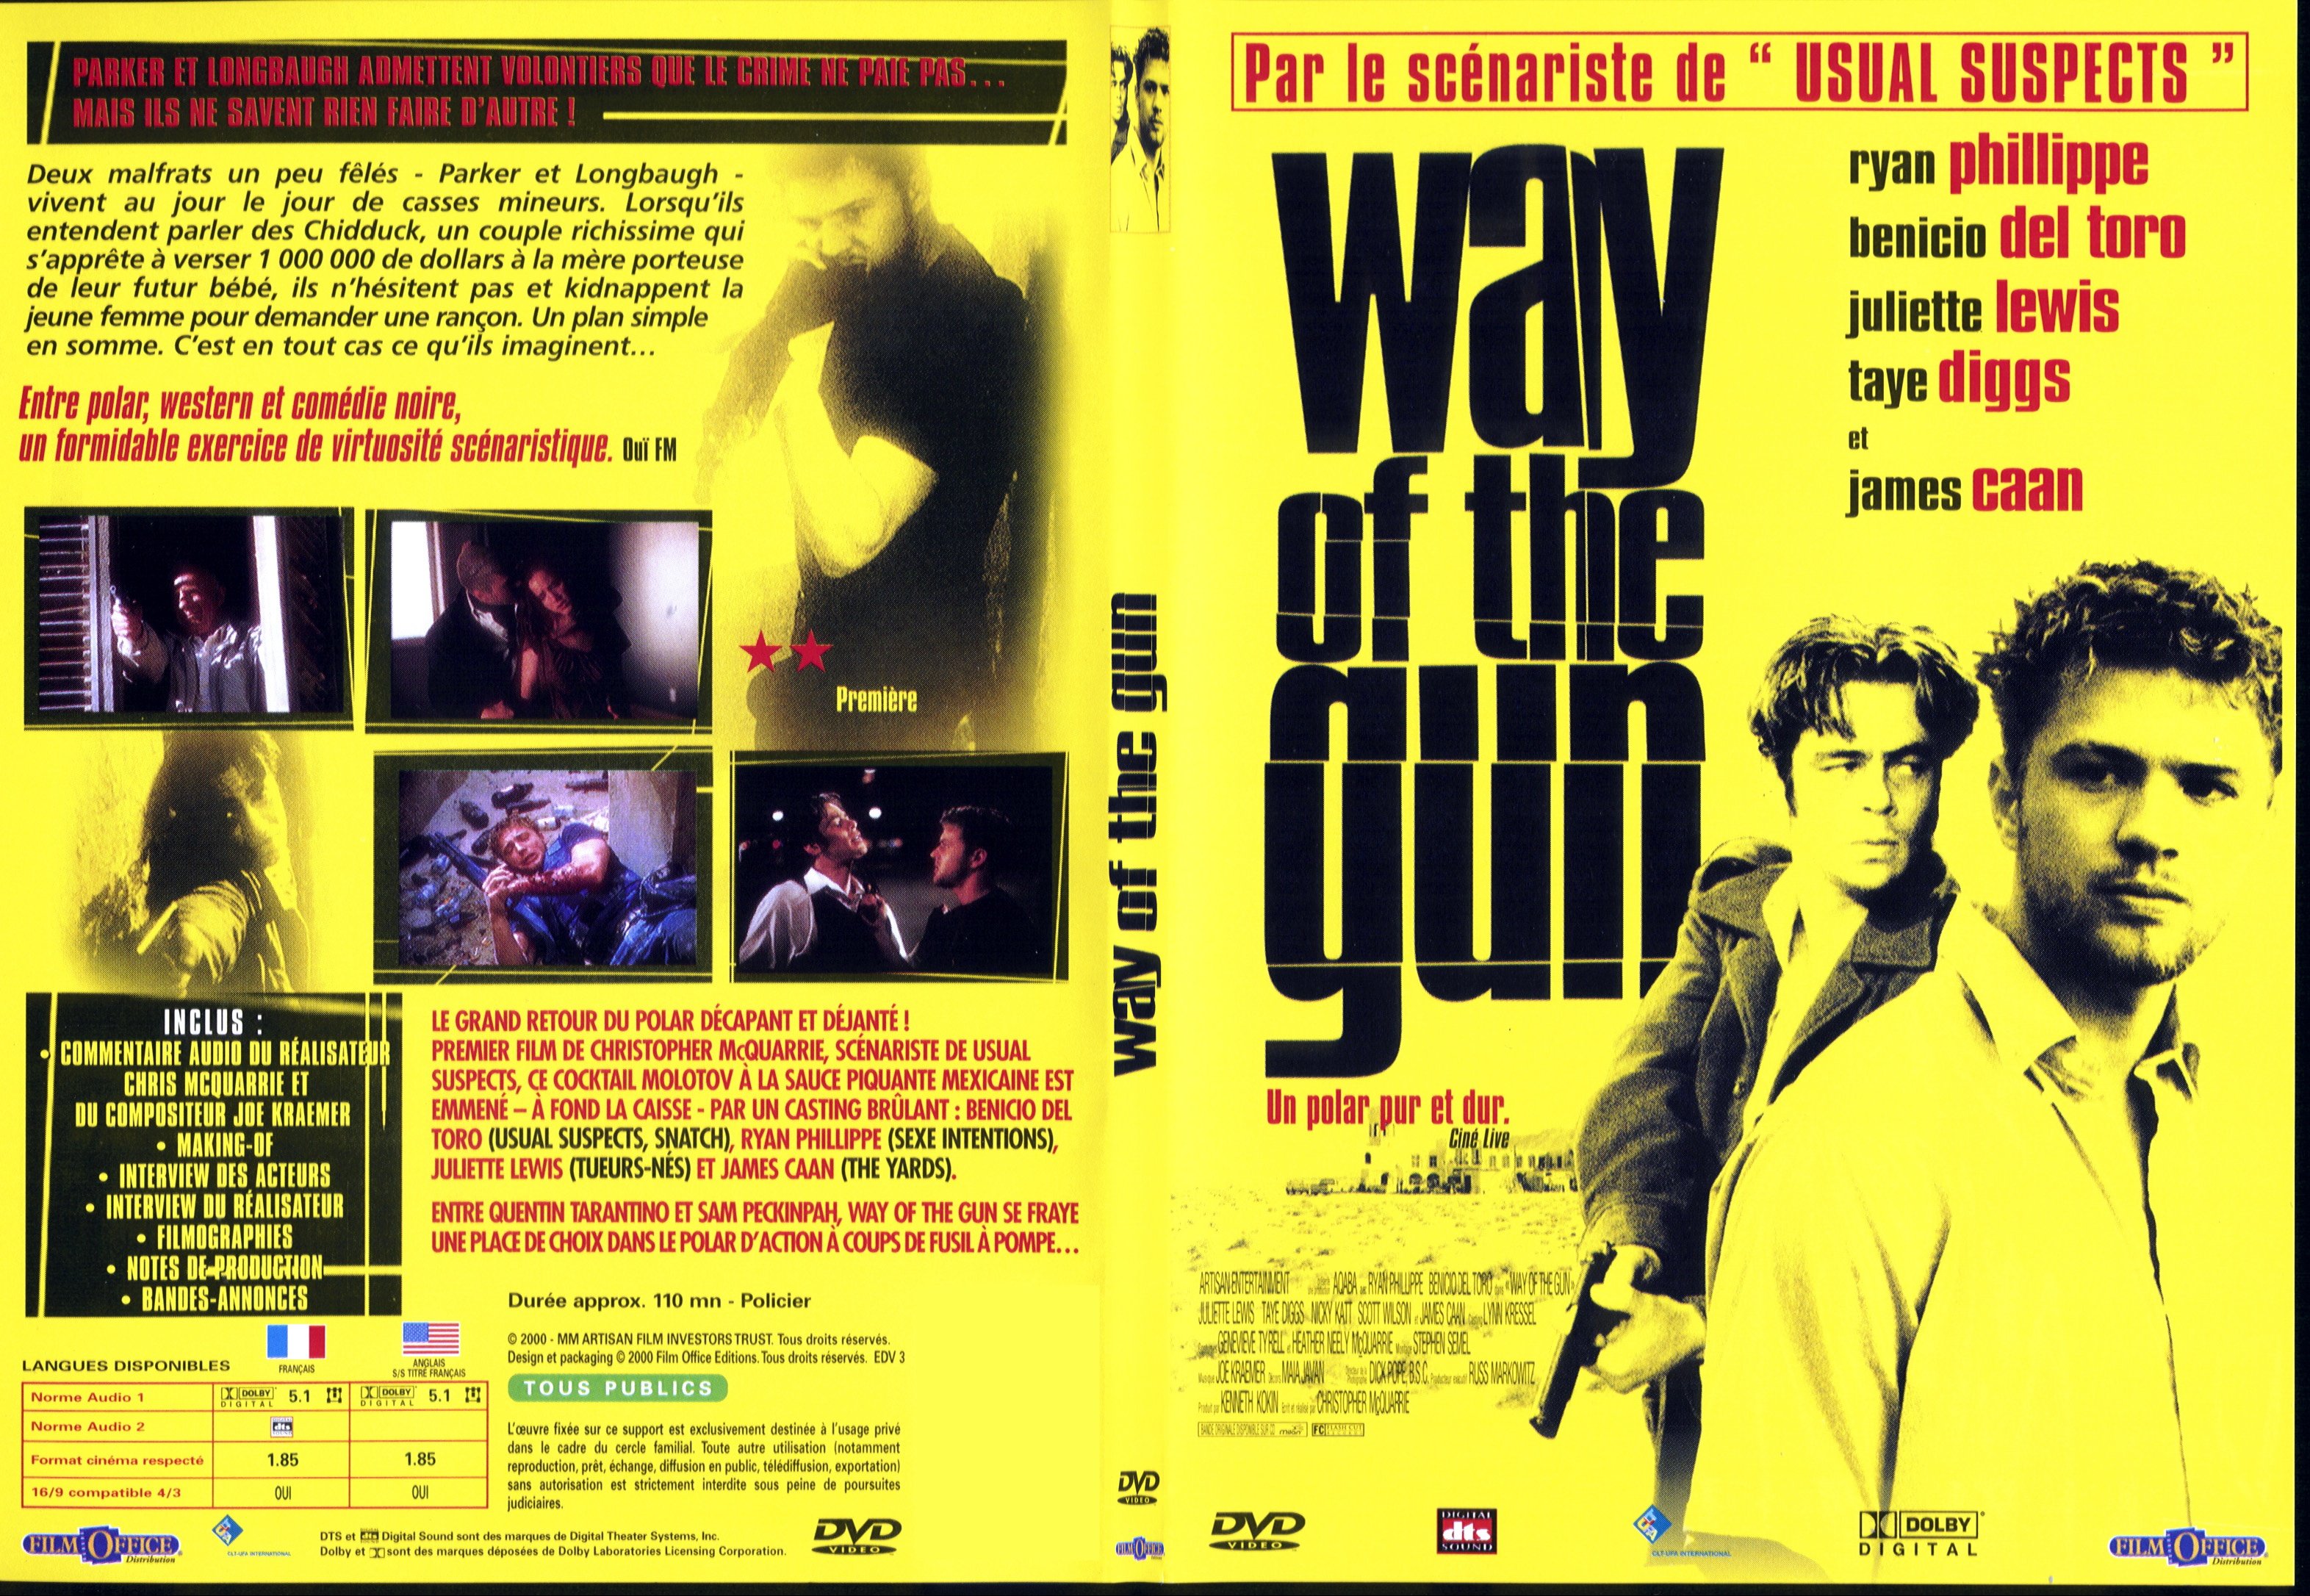 Jaquette DVD Way of the gun - SLIM v2